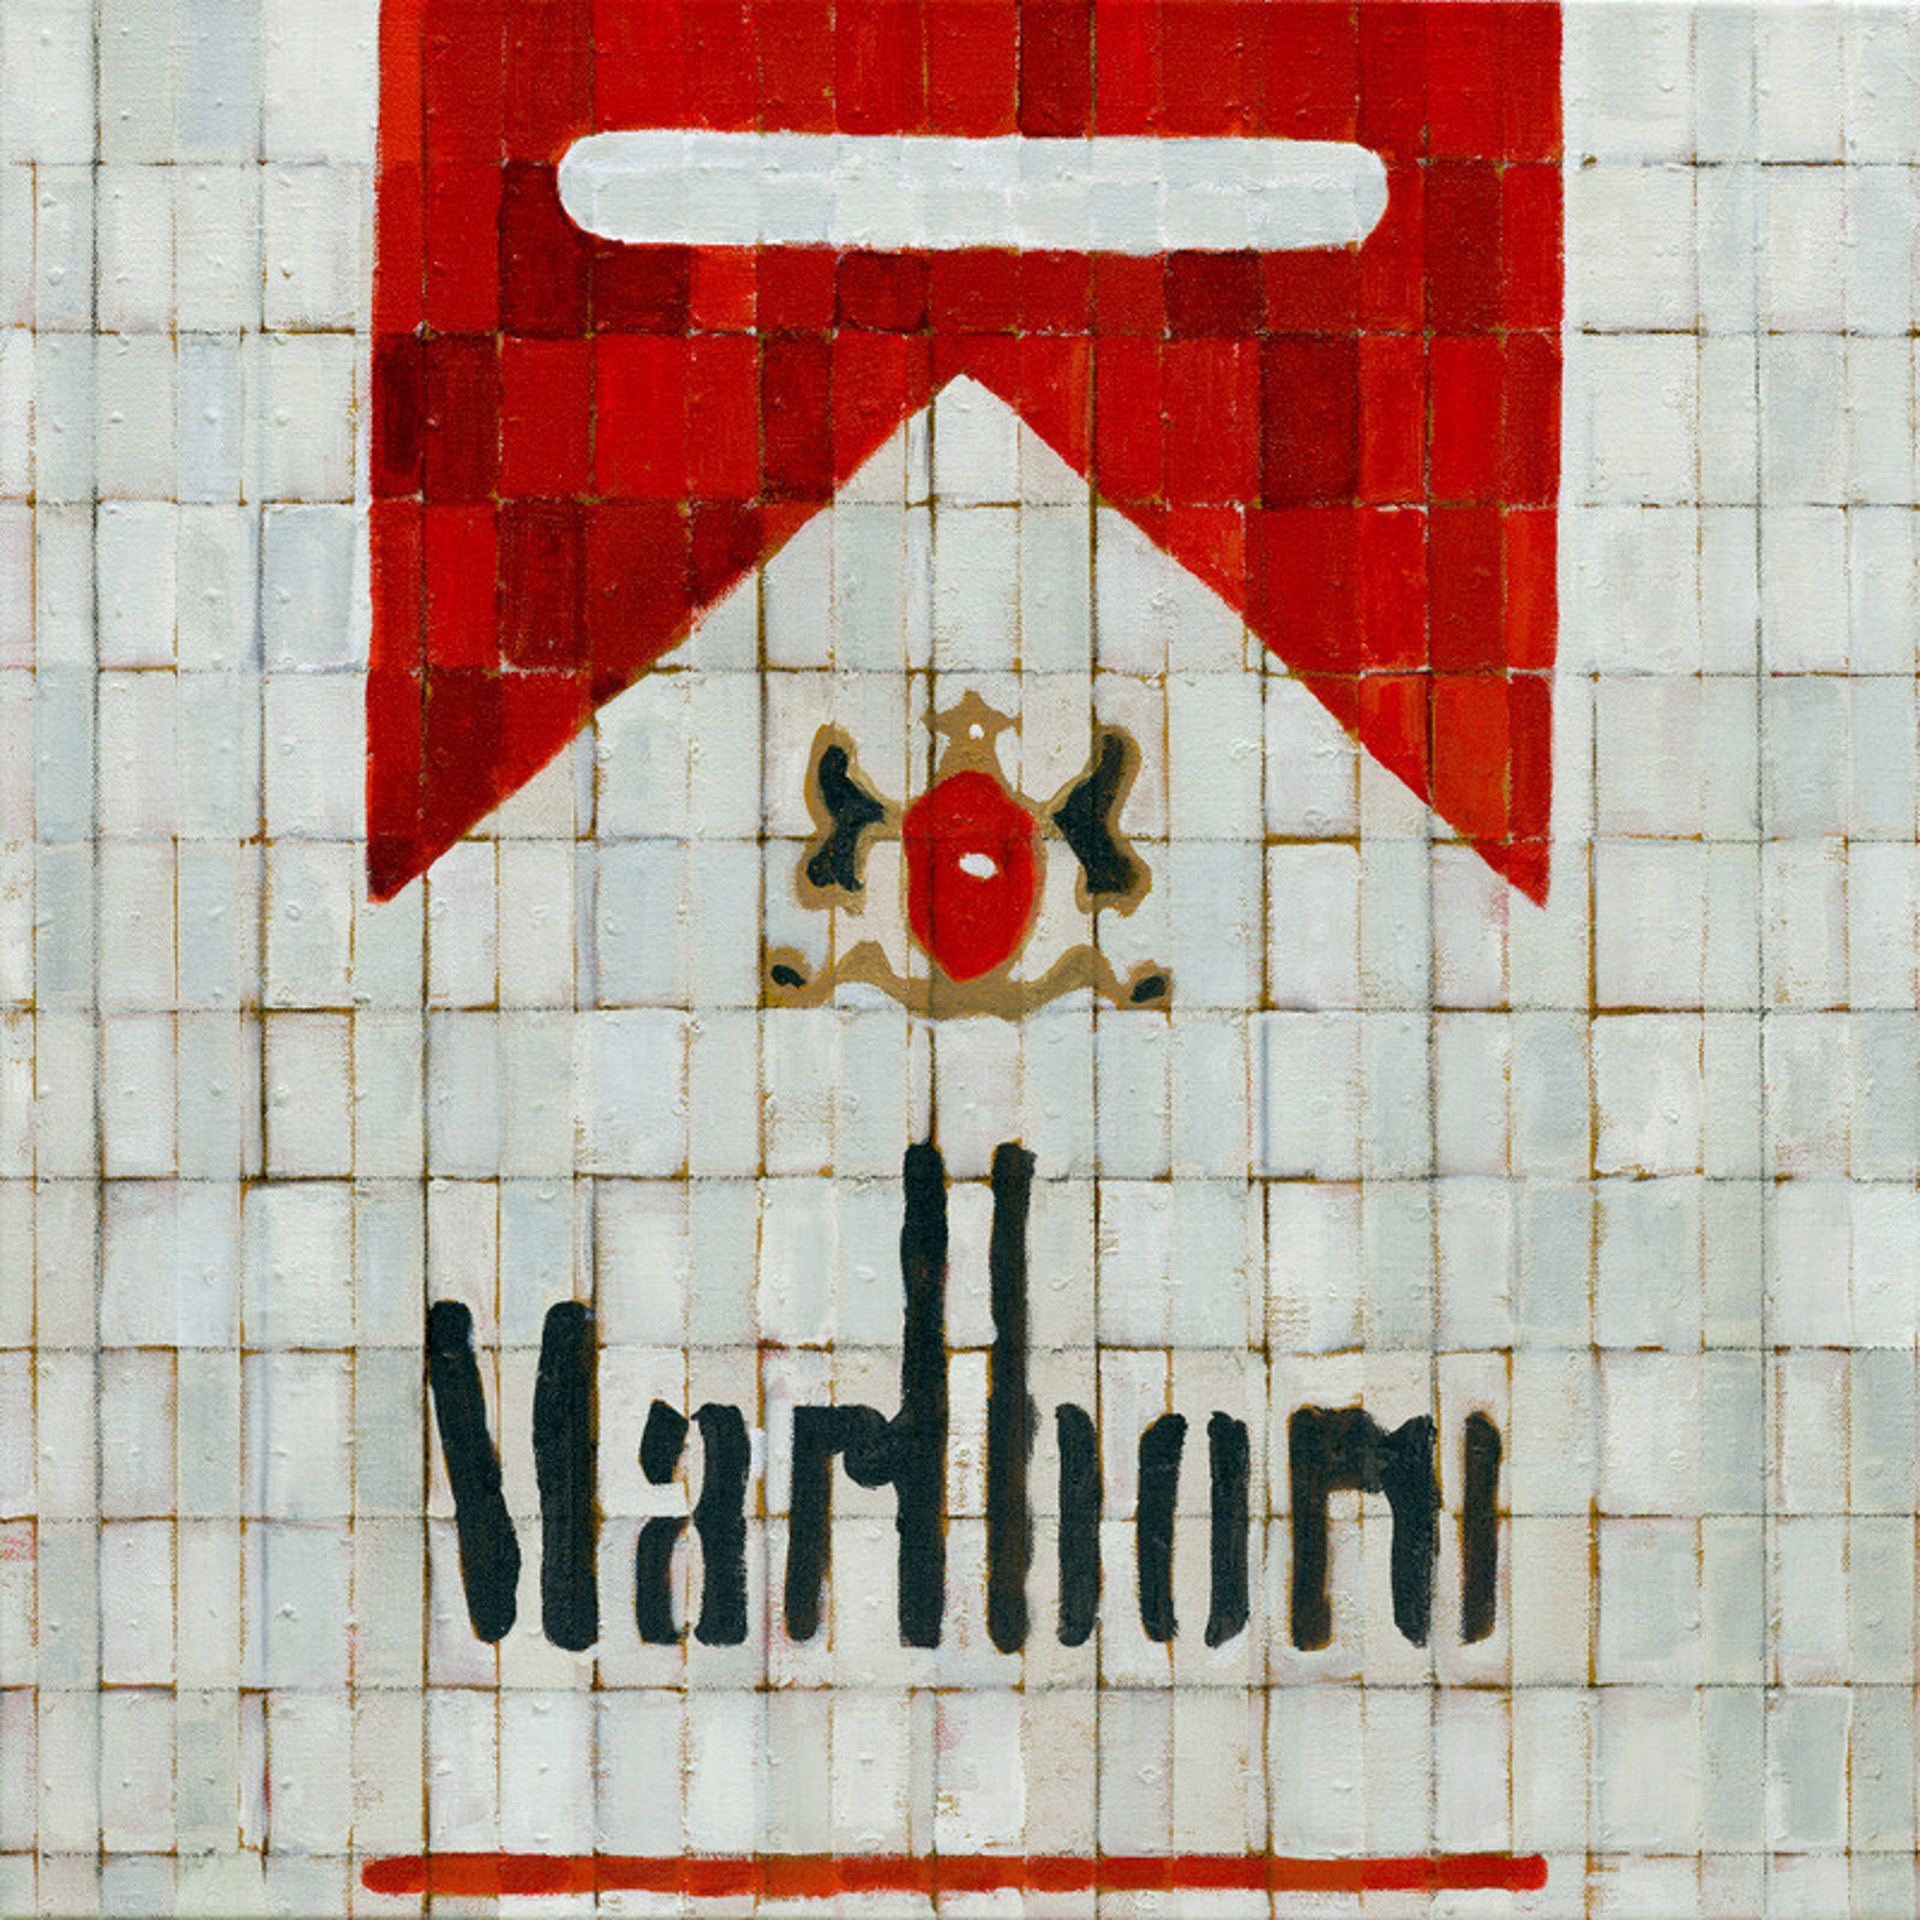 "Marlboro" by Gabe Langholtz